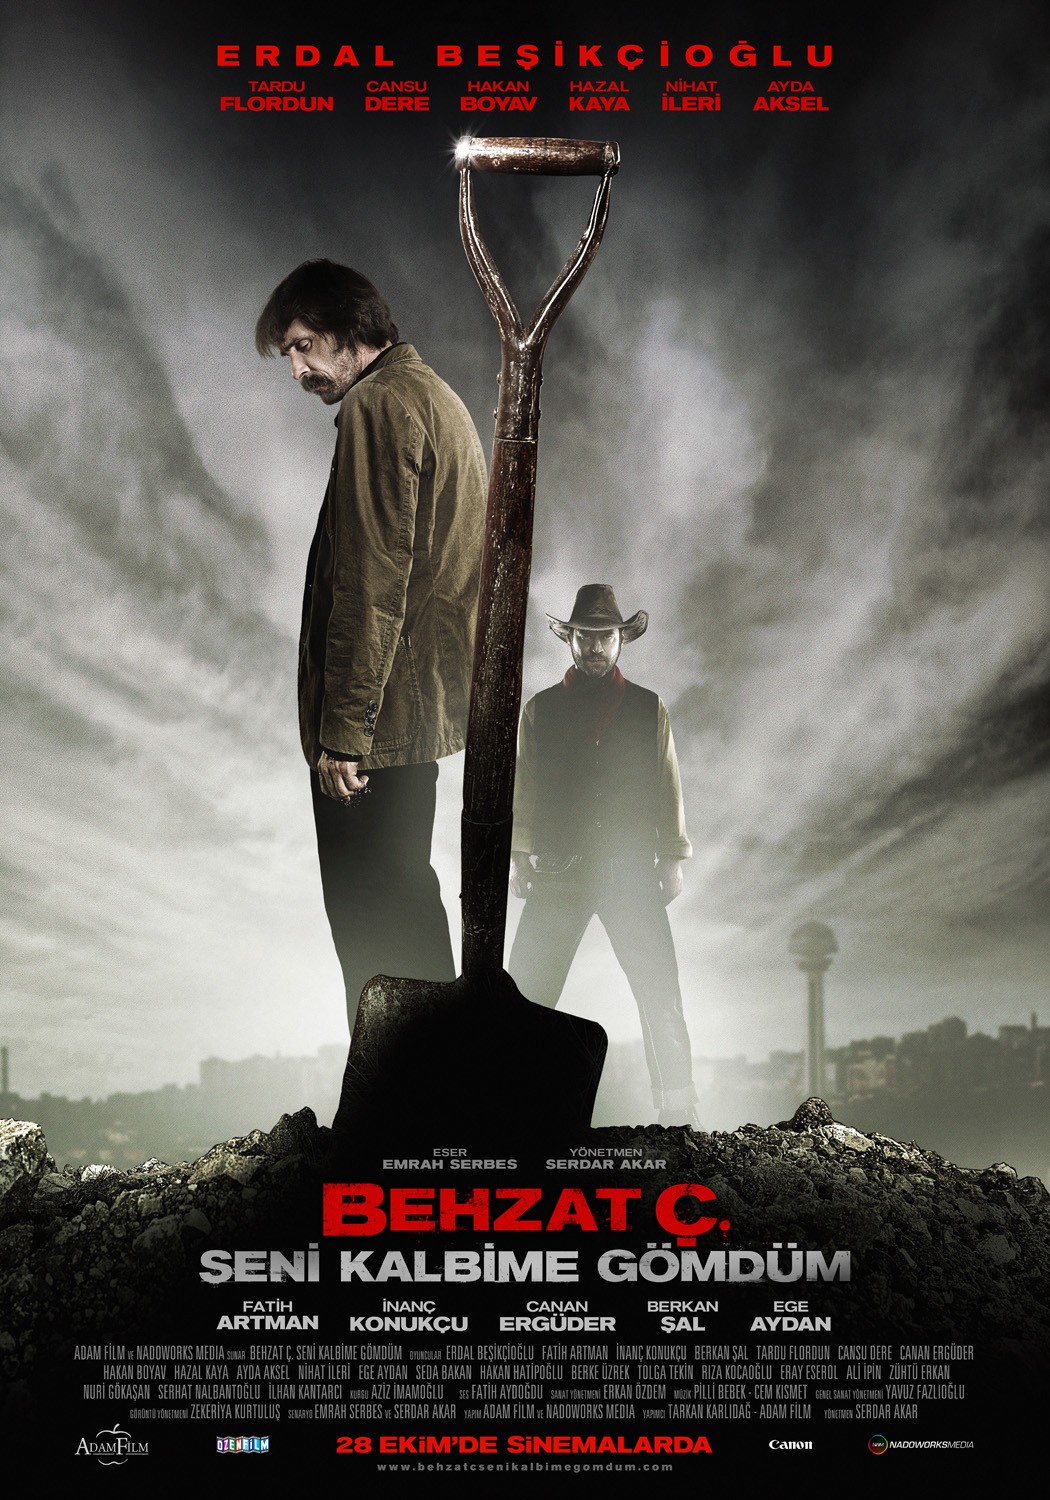 Extra Large Movie Poster Image for Behzat Ç - Seni Kalbime Gömdüm (#12 of 12)